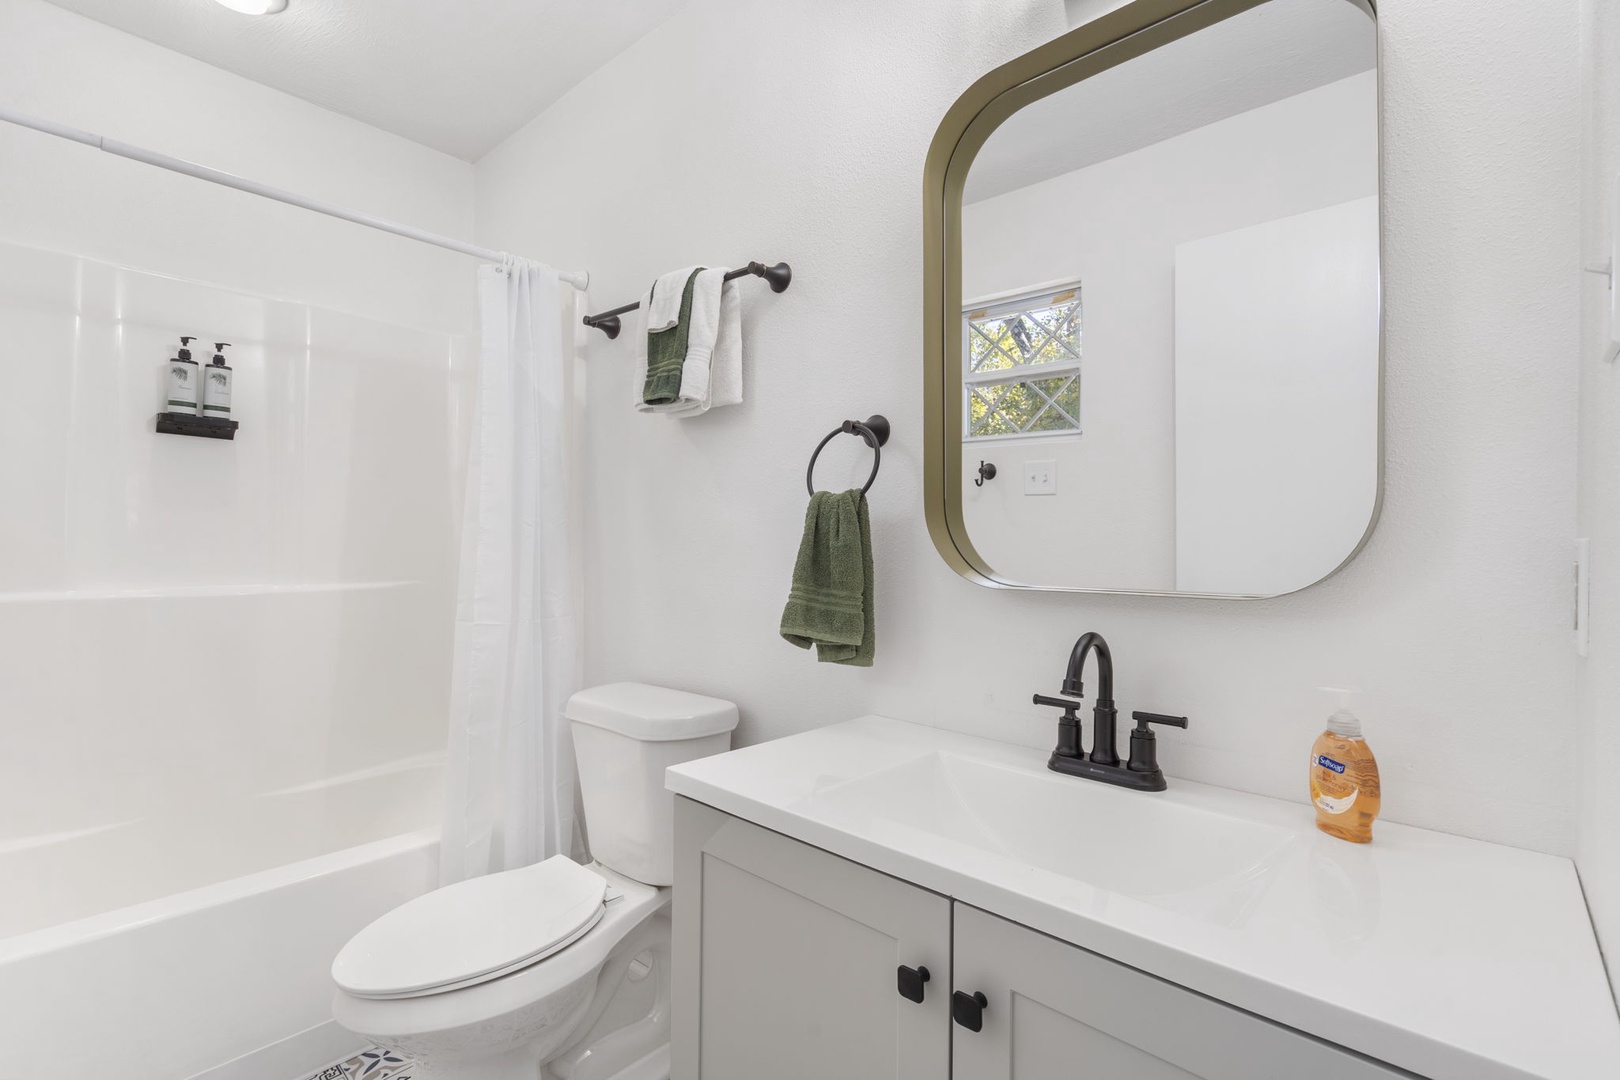 The king en suite bathroom includes a single vanity & shower/tub combo